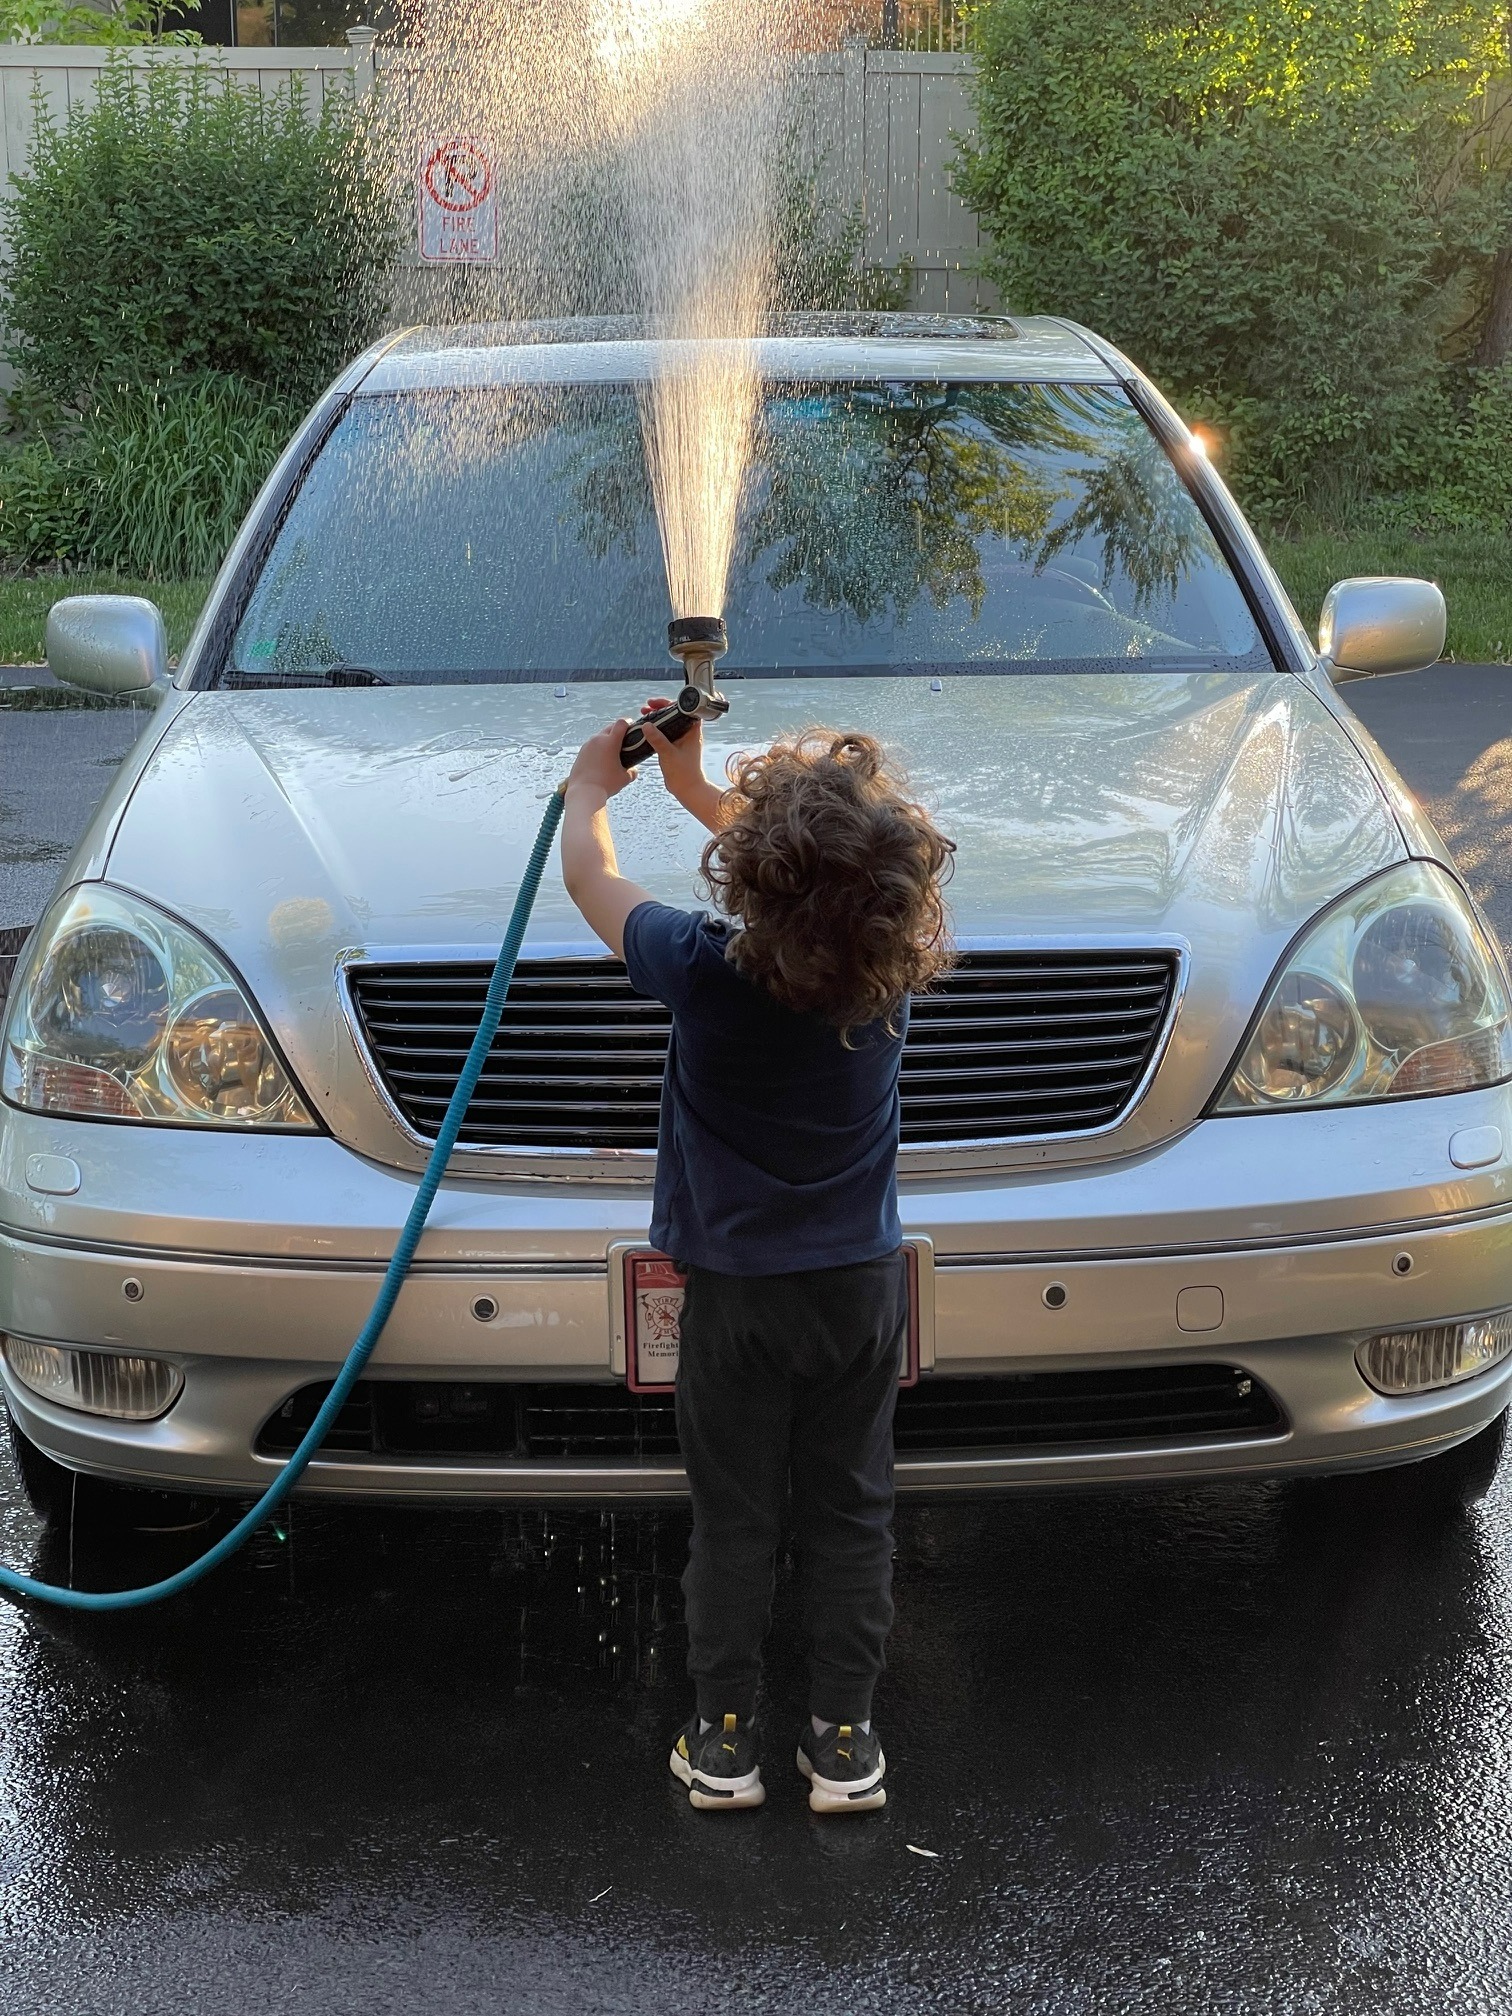 Car washing tips, why car wash yourself?, important to wash your car yourself, vehicle car wash, 